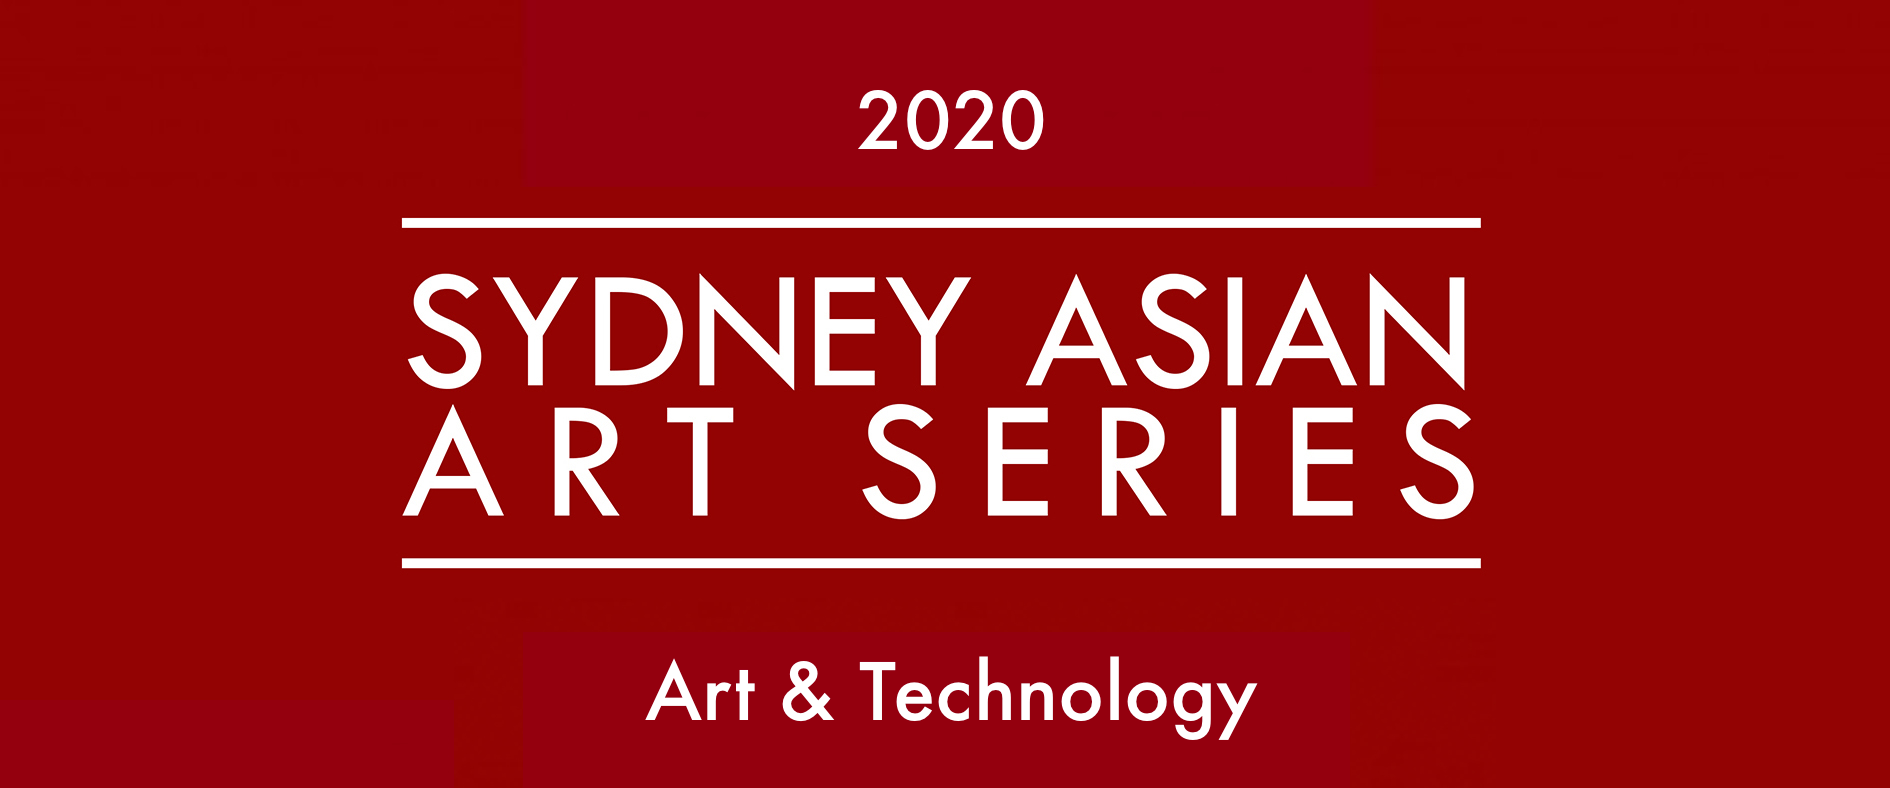 2020 Sydney Asian Art Series: Art & Technology